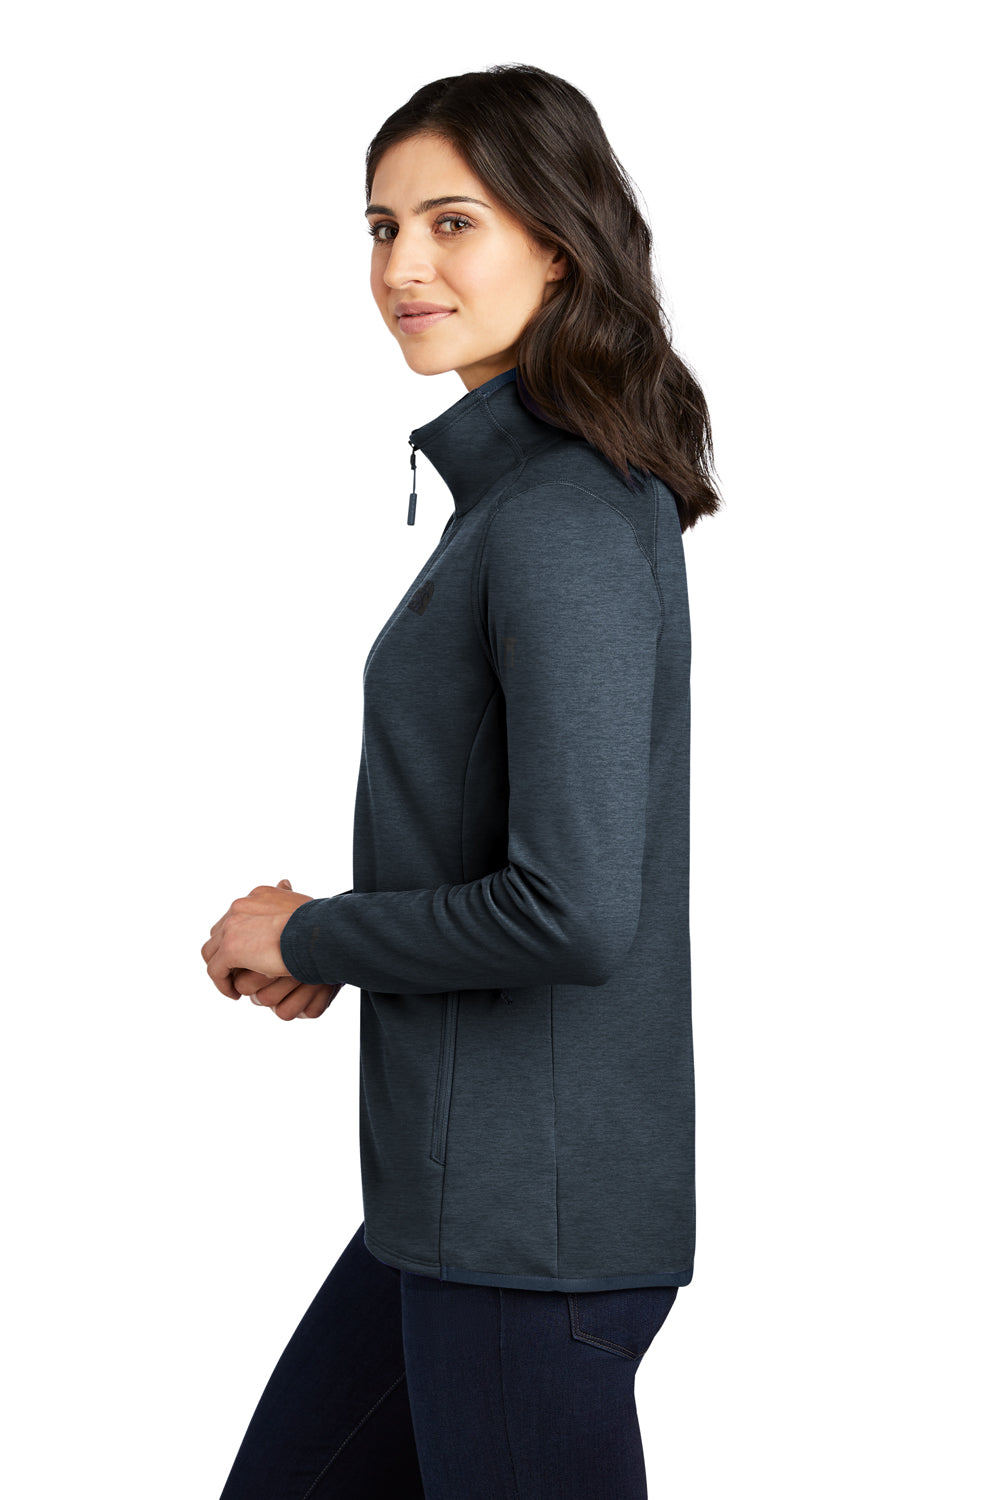 The North Face NF0A7V62 Womens Skyline Full Zip Fleece Jacket Heather Urban Navy Blue Side